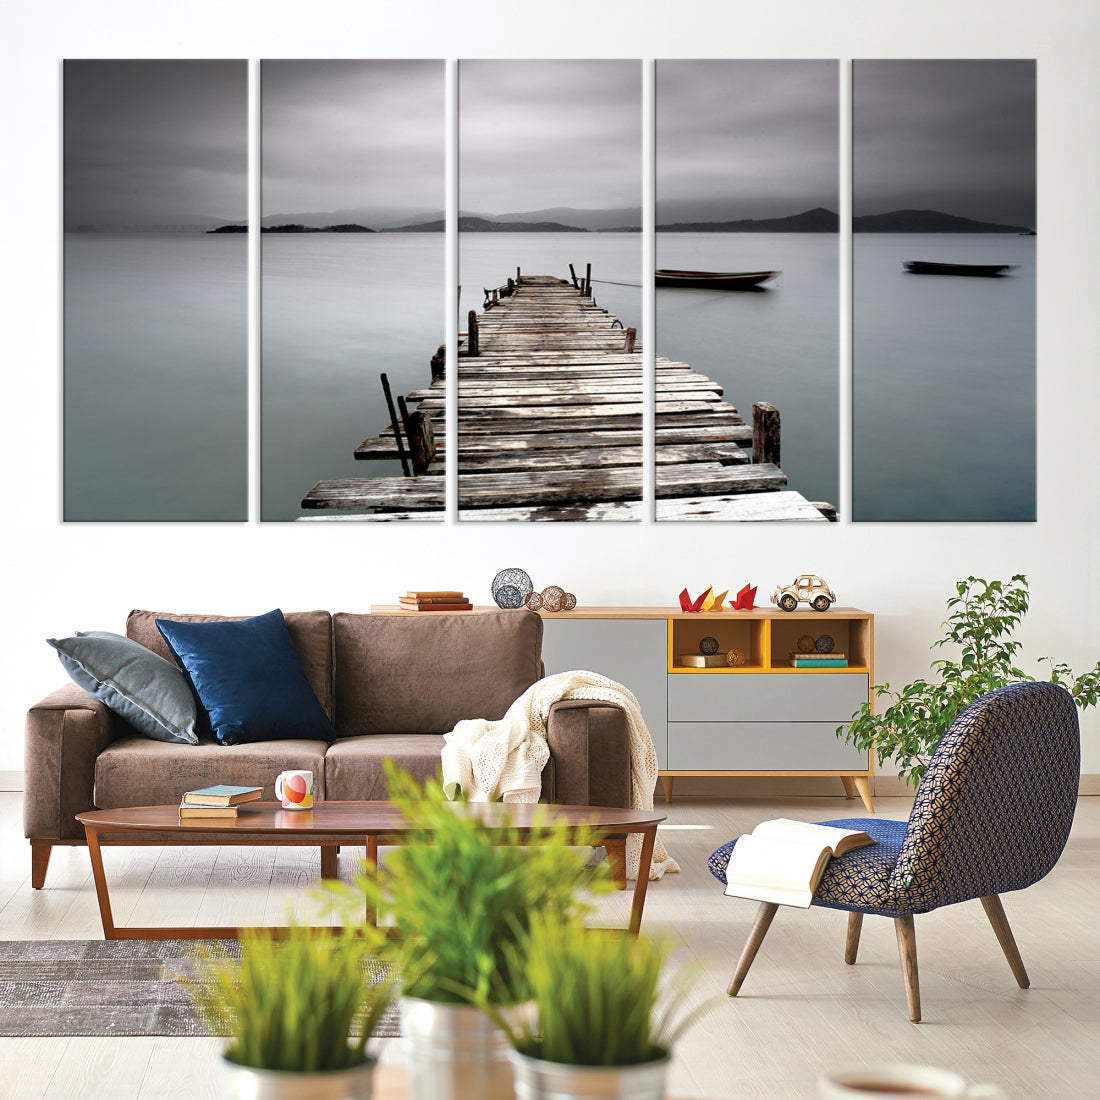 Wooden Pier Canvas Wall Art Print Beach Landscape Artwork for Living Room Home Decor